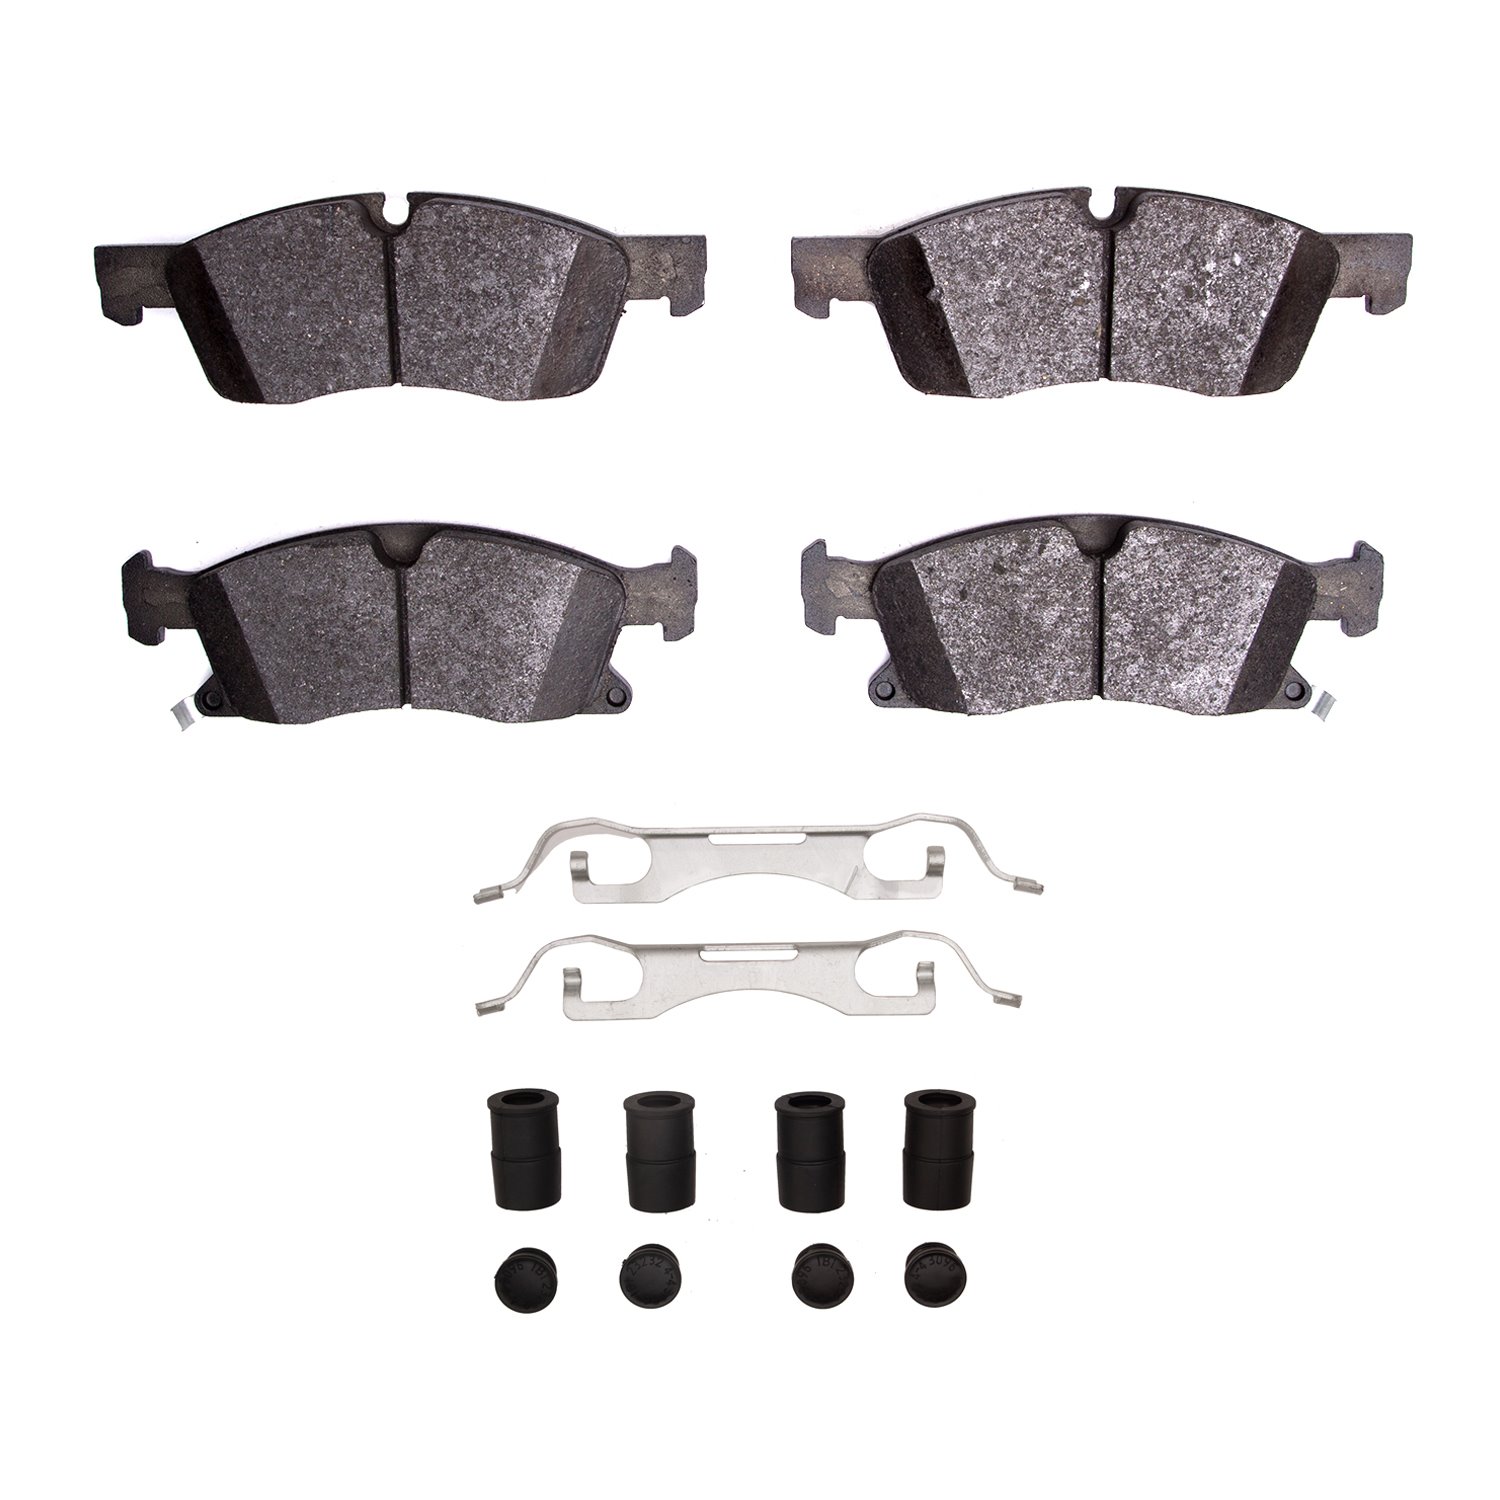 1552-1904-01 5000 Advanced Ceramic Brake Pads & Hardware Kit, Fits Select Mopar, Position: Front